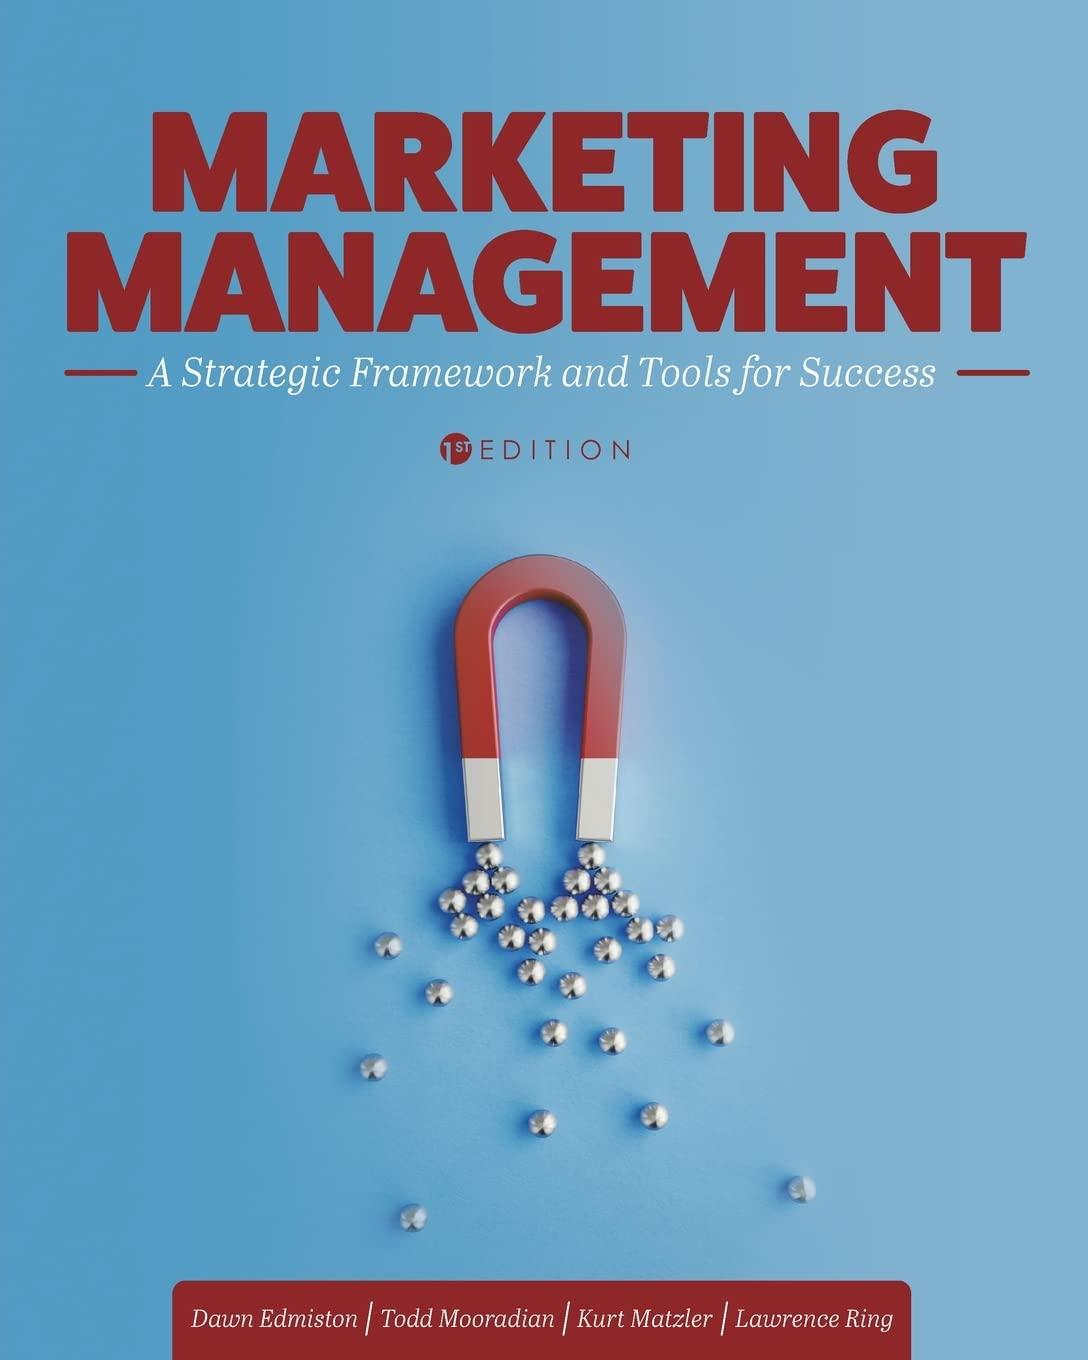 marketing management a strategic framework and tools for success 1st edition dawn edmiston, kurt matzler,